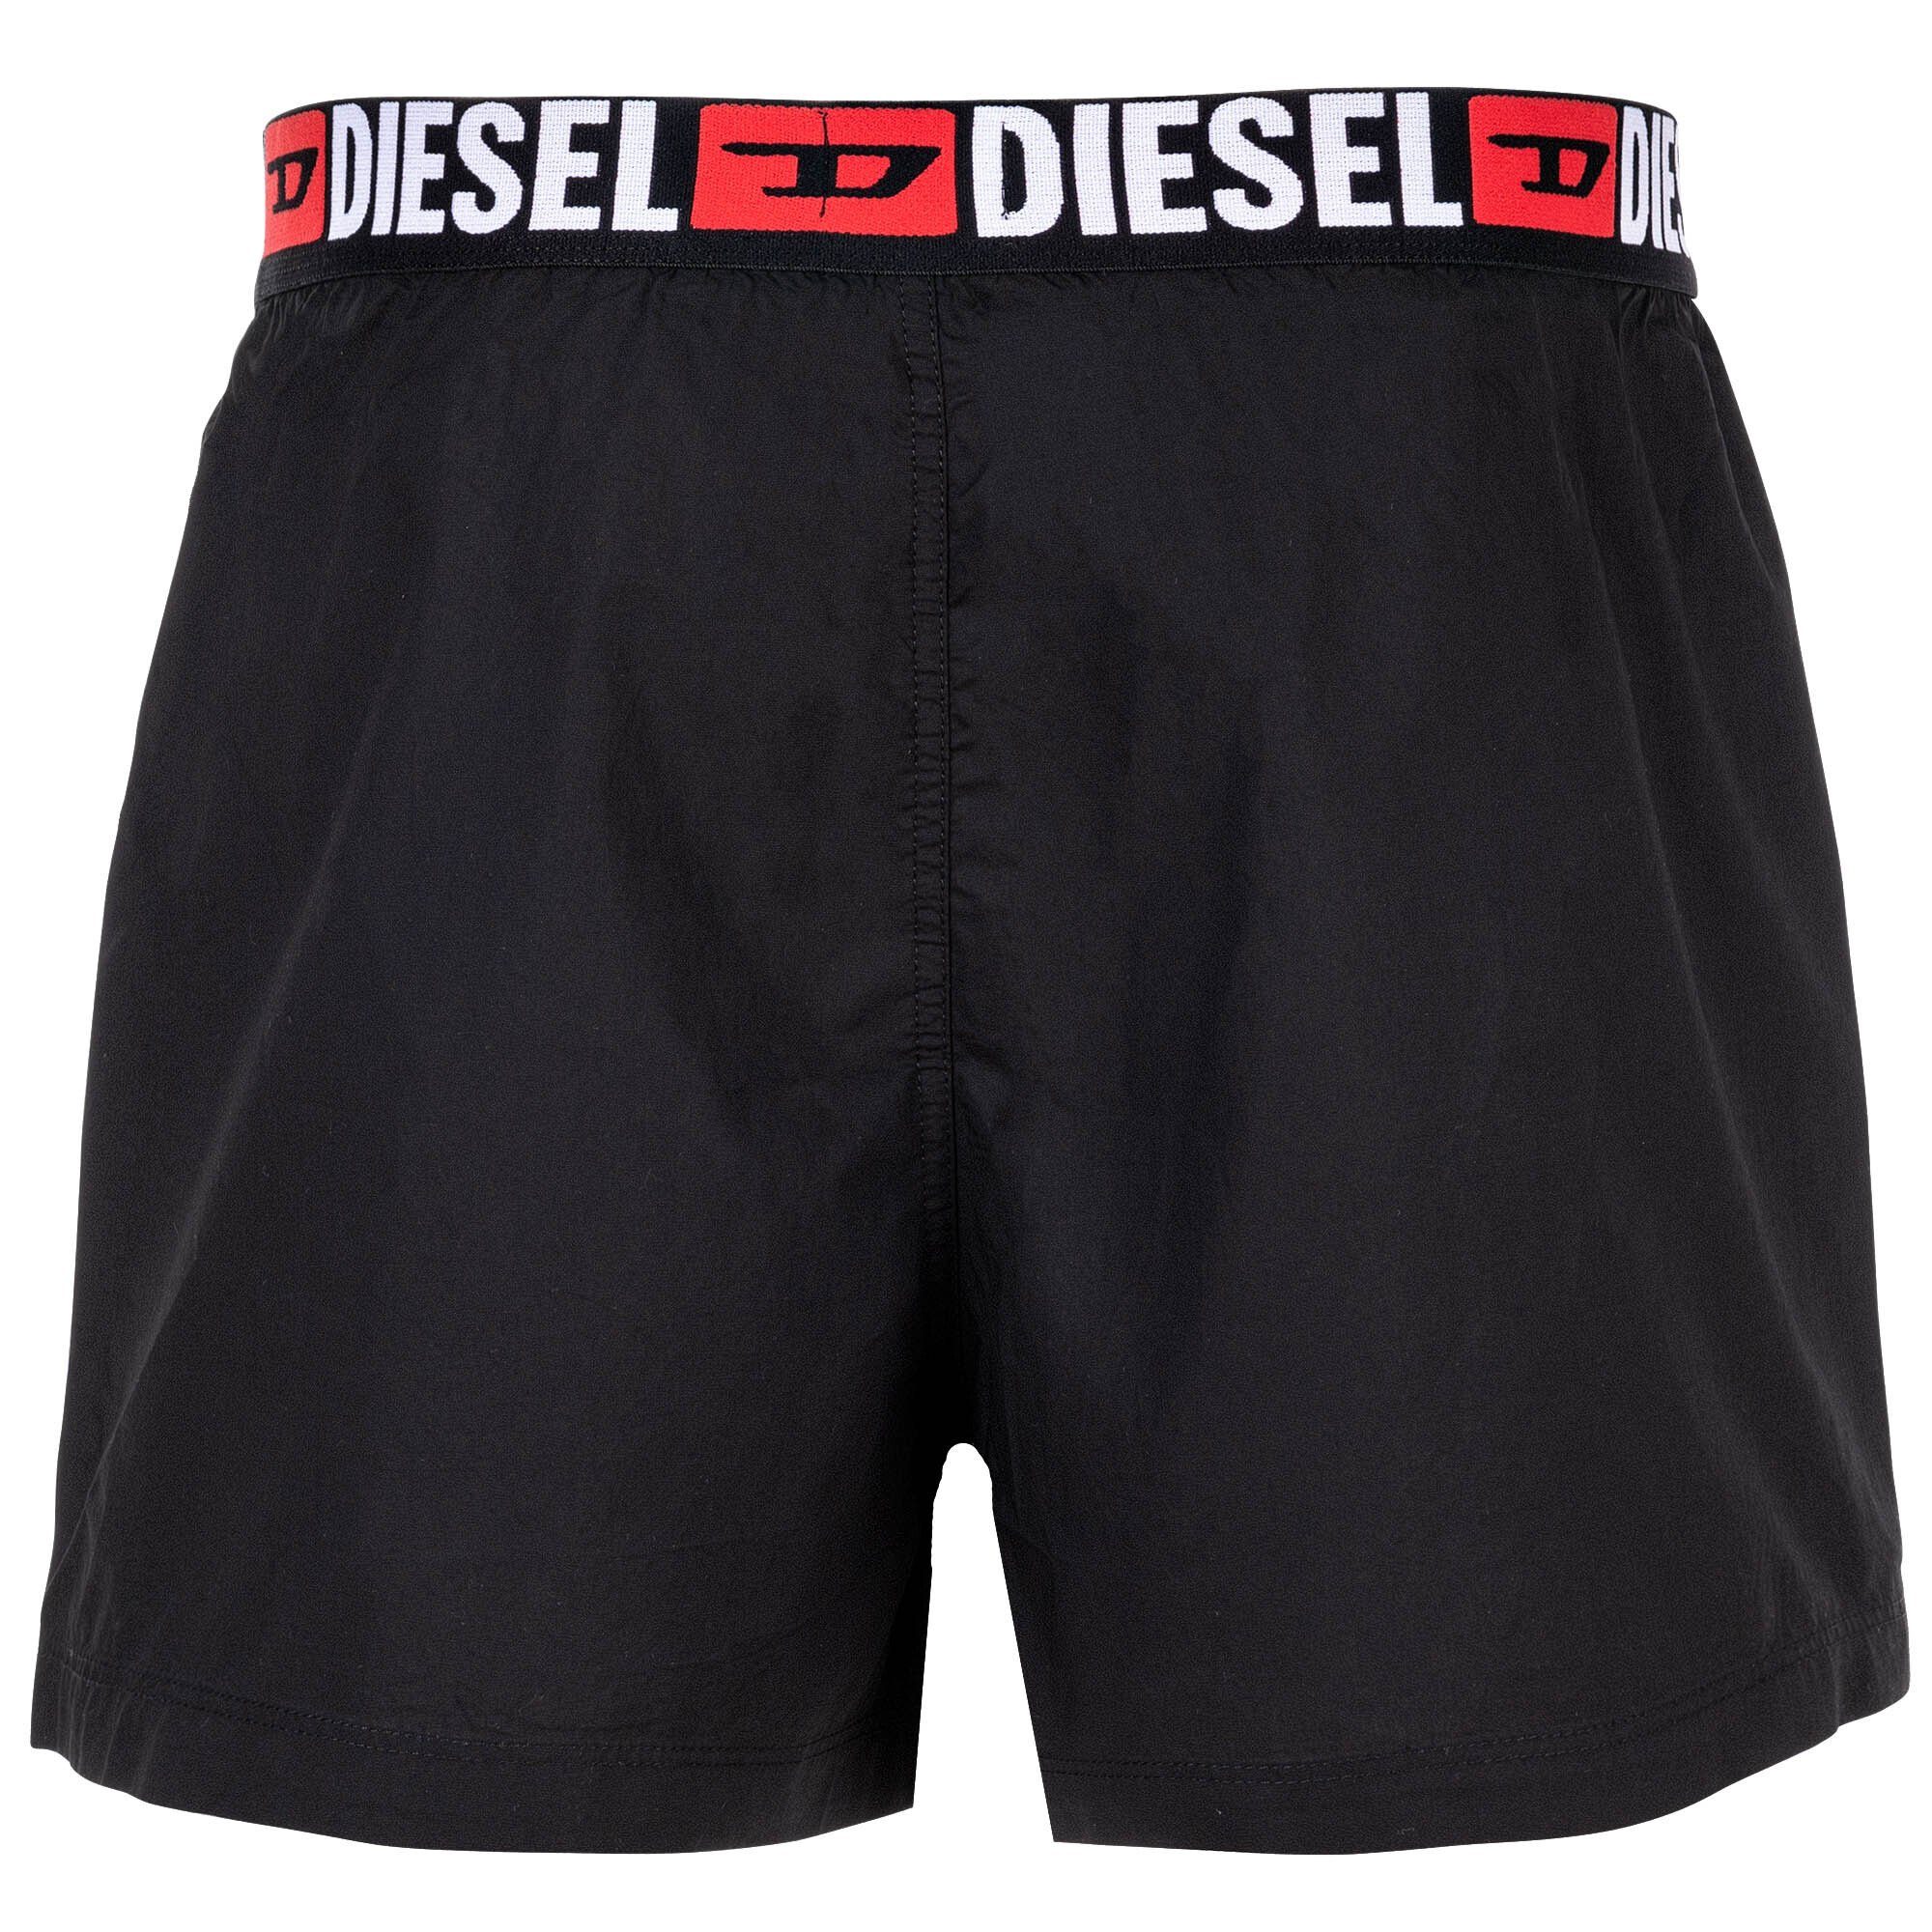 - Boxershorts Herren Schwarz Web-Boxershorts, Diesel Pack 2er